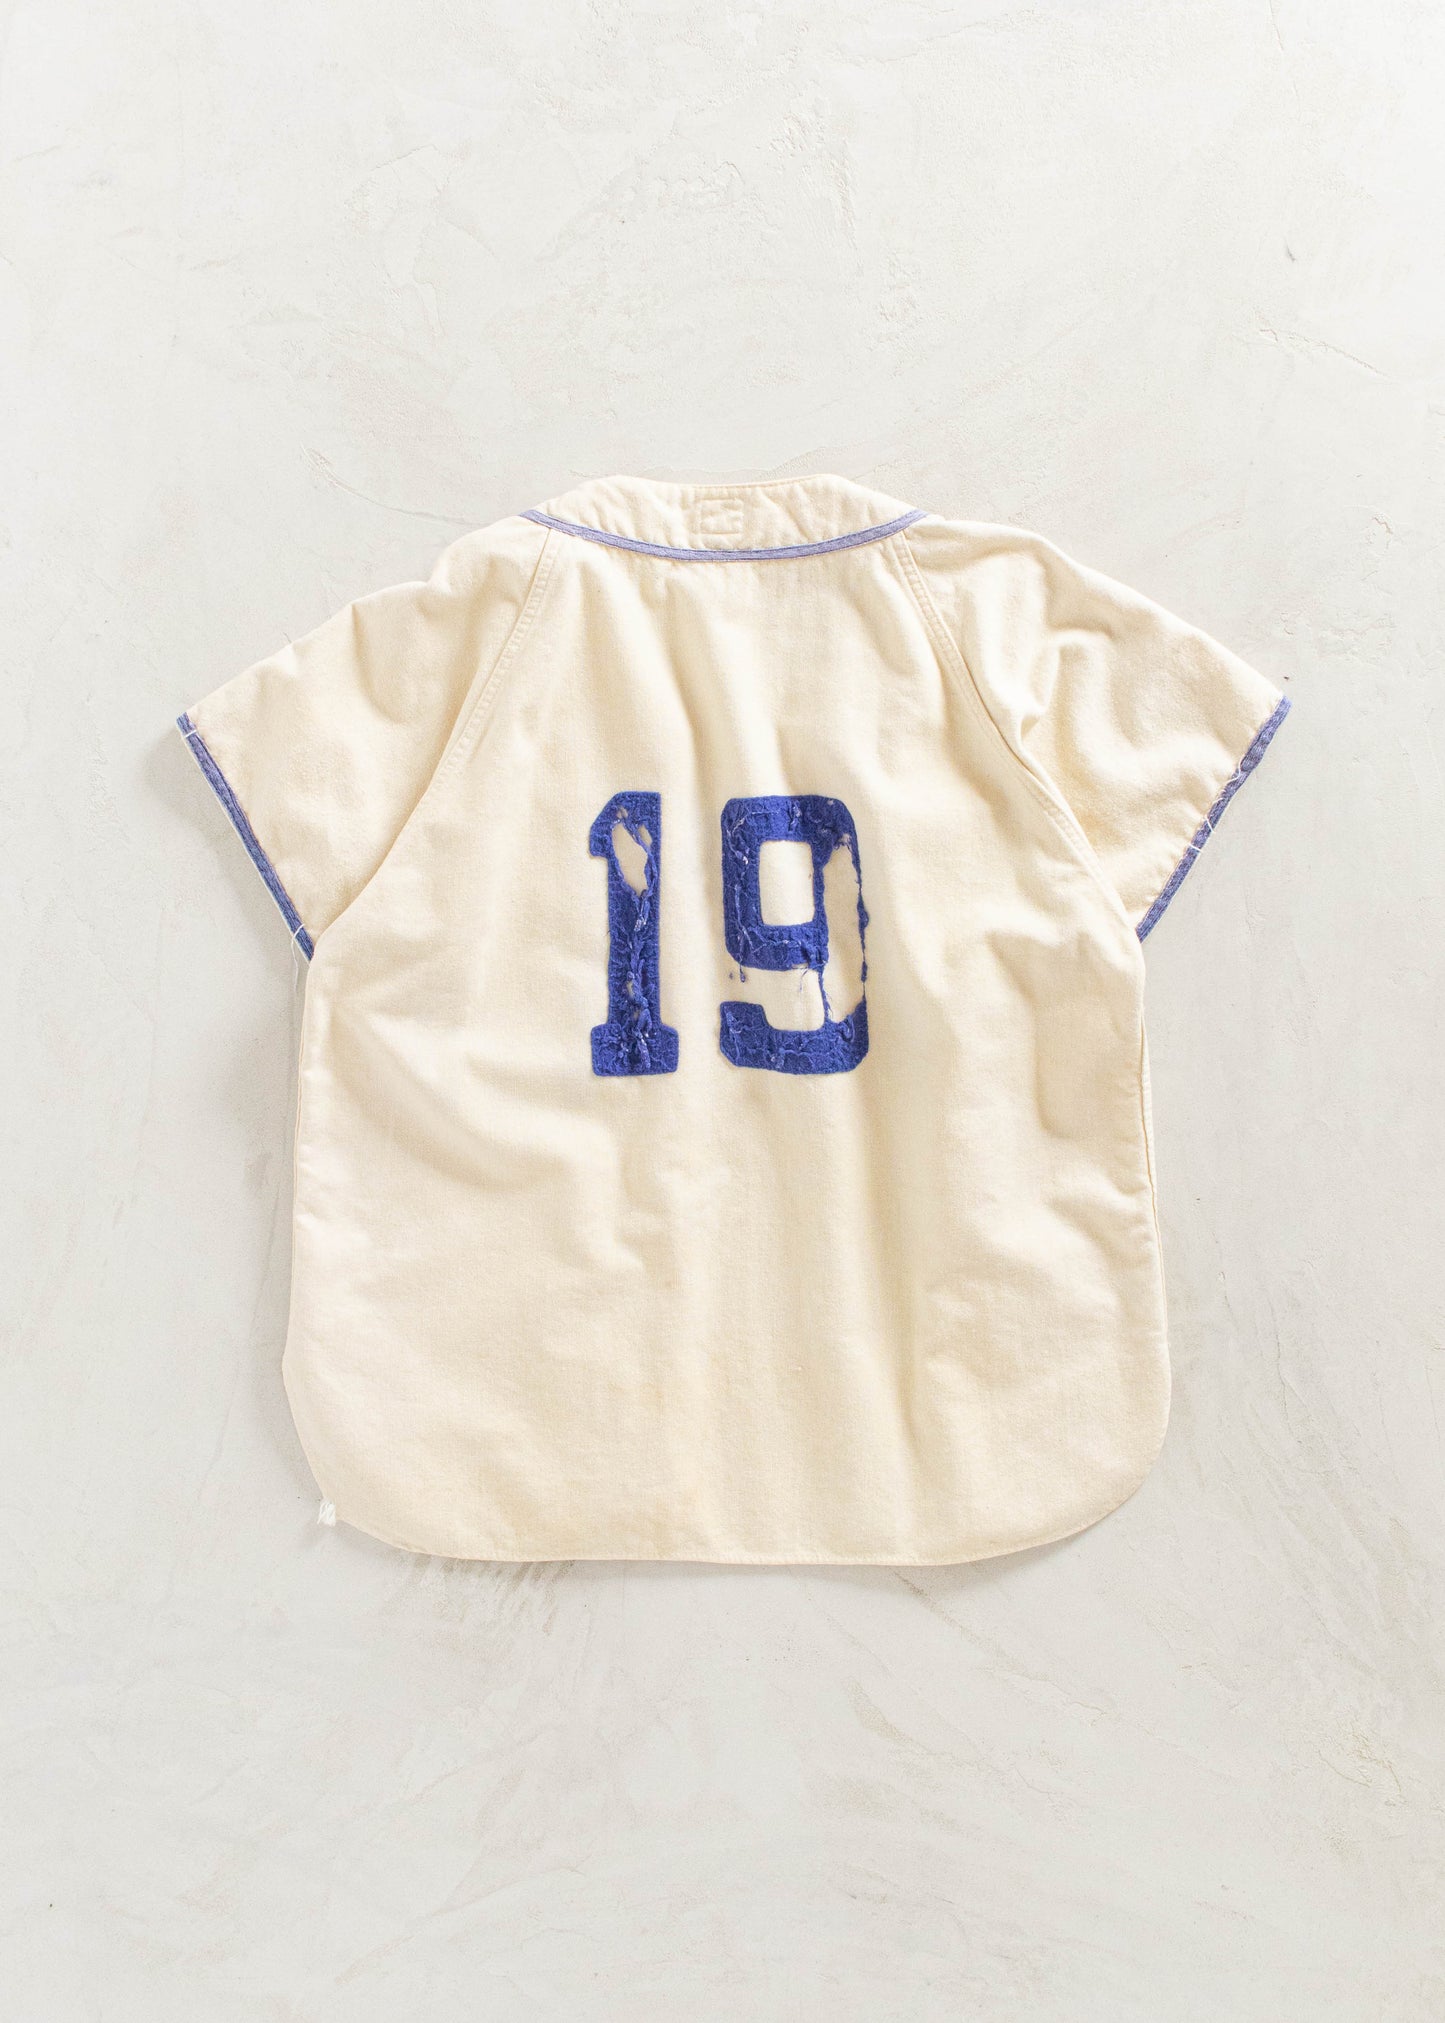 Vintage 1960s St-Alexis Wool Baseball Shirt Size L/XL